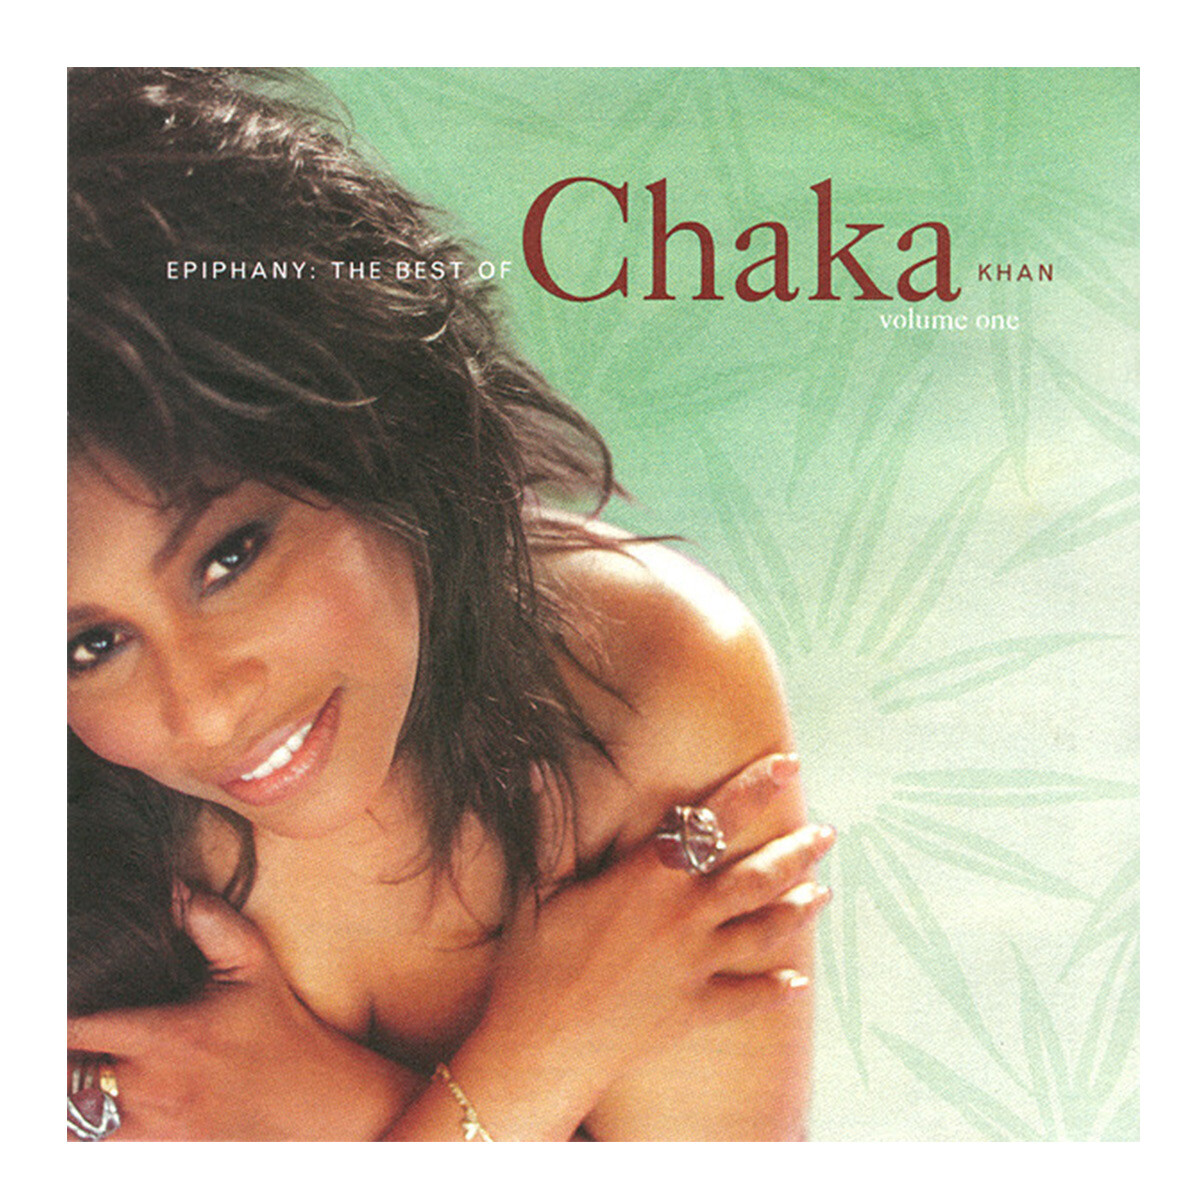 Chaka Khan - Epiphany - The Best Of - Volume One - Vinilo 